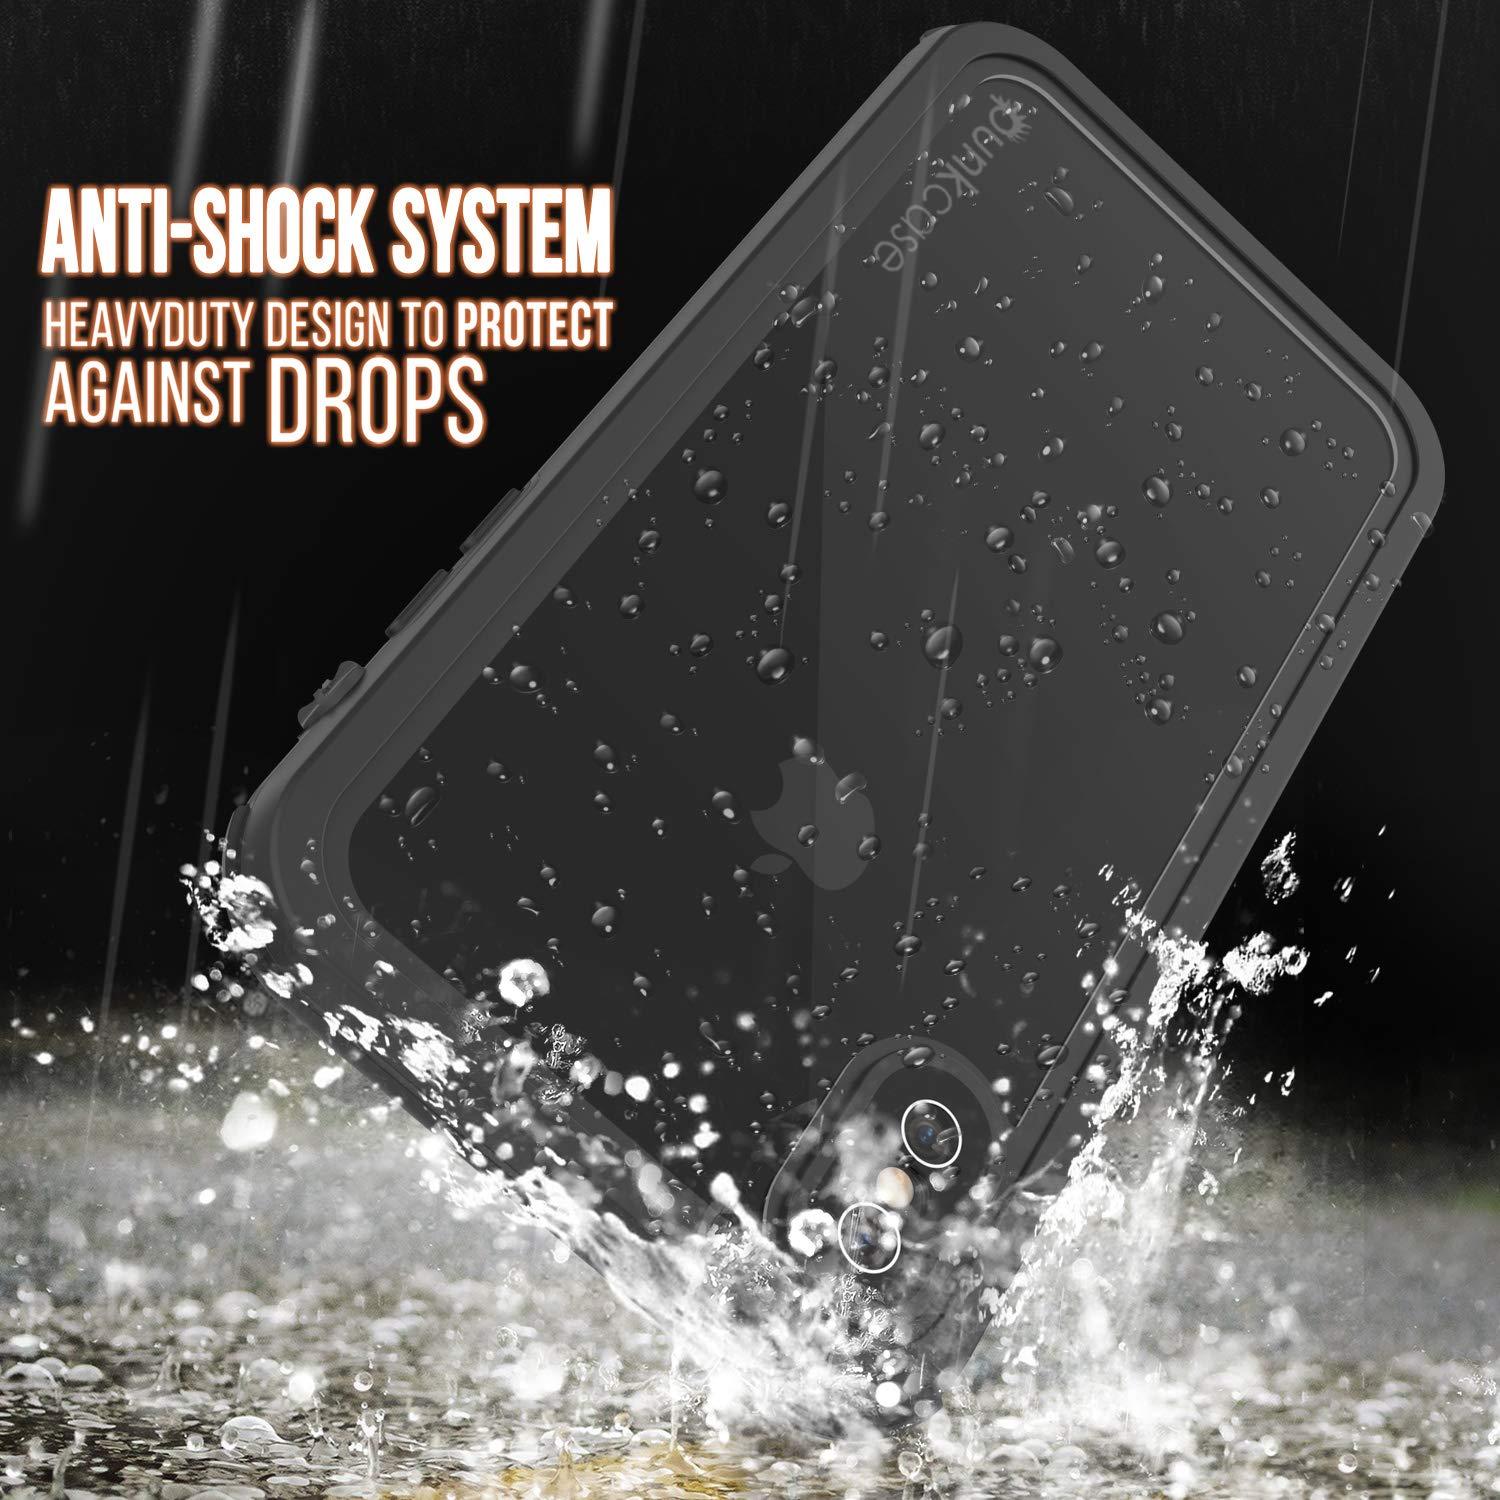 iPhone XS Waterproof IP68 Case, Punkcase [pink] [Rapture Series]  W/Built in Screen Protector